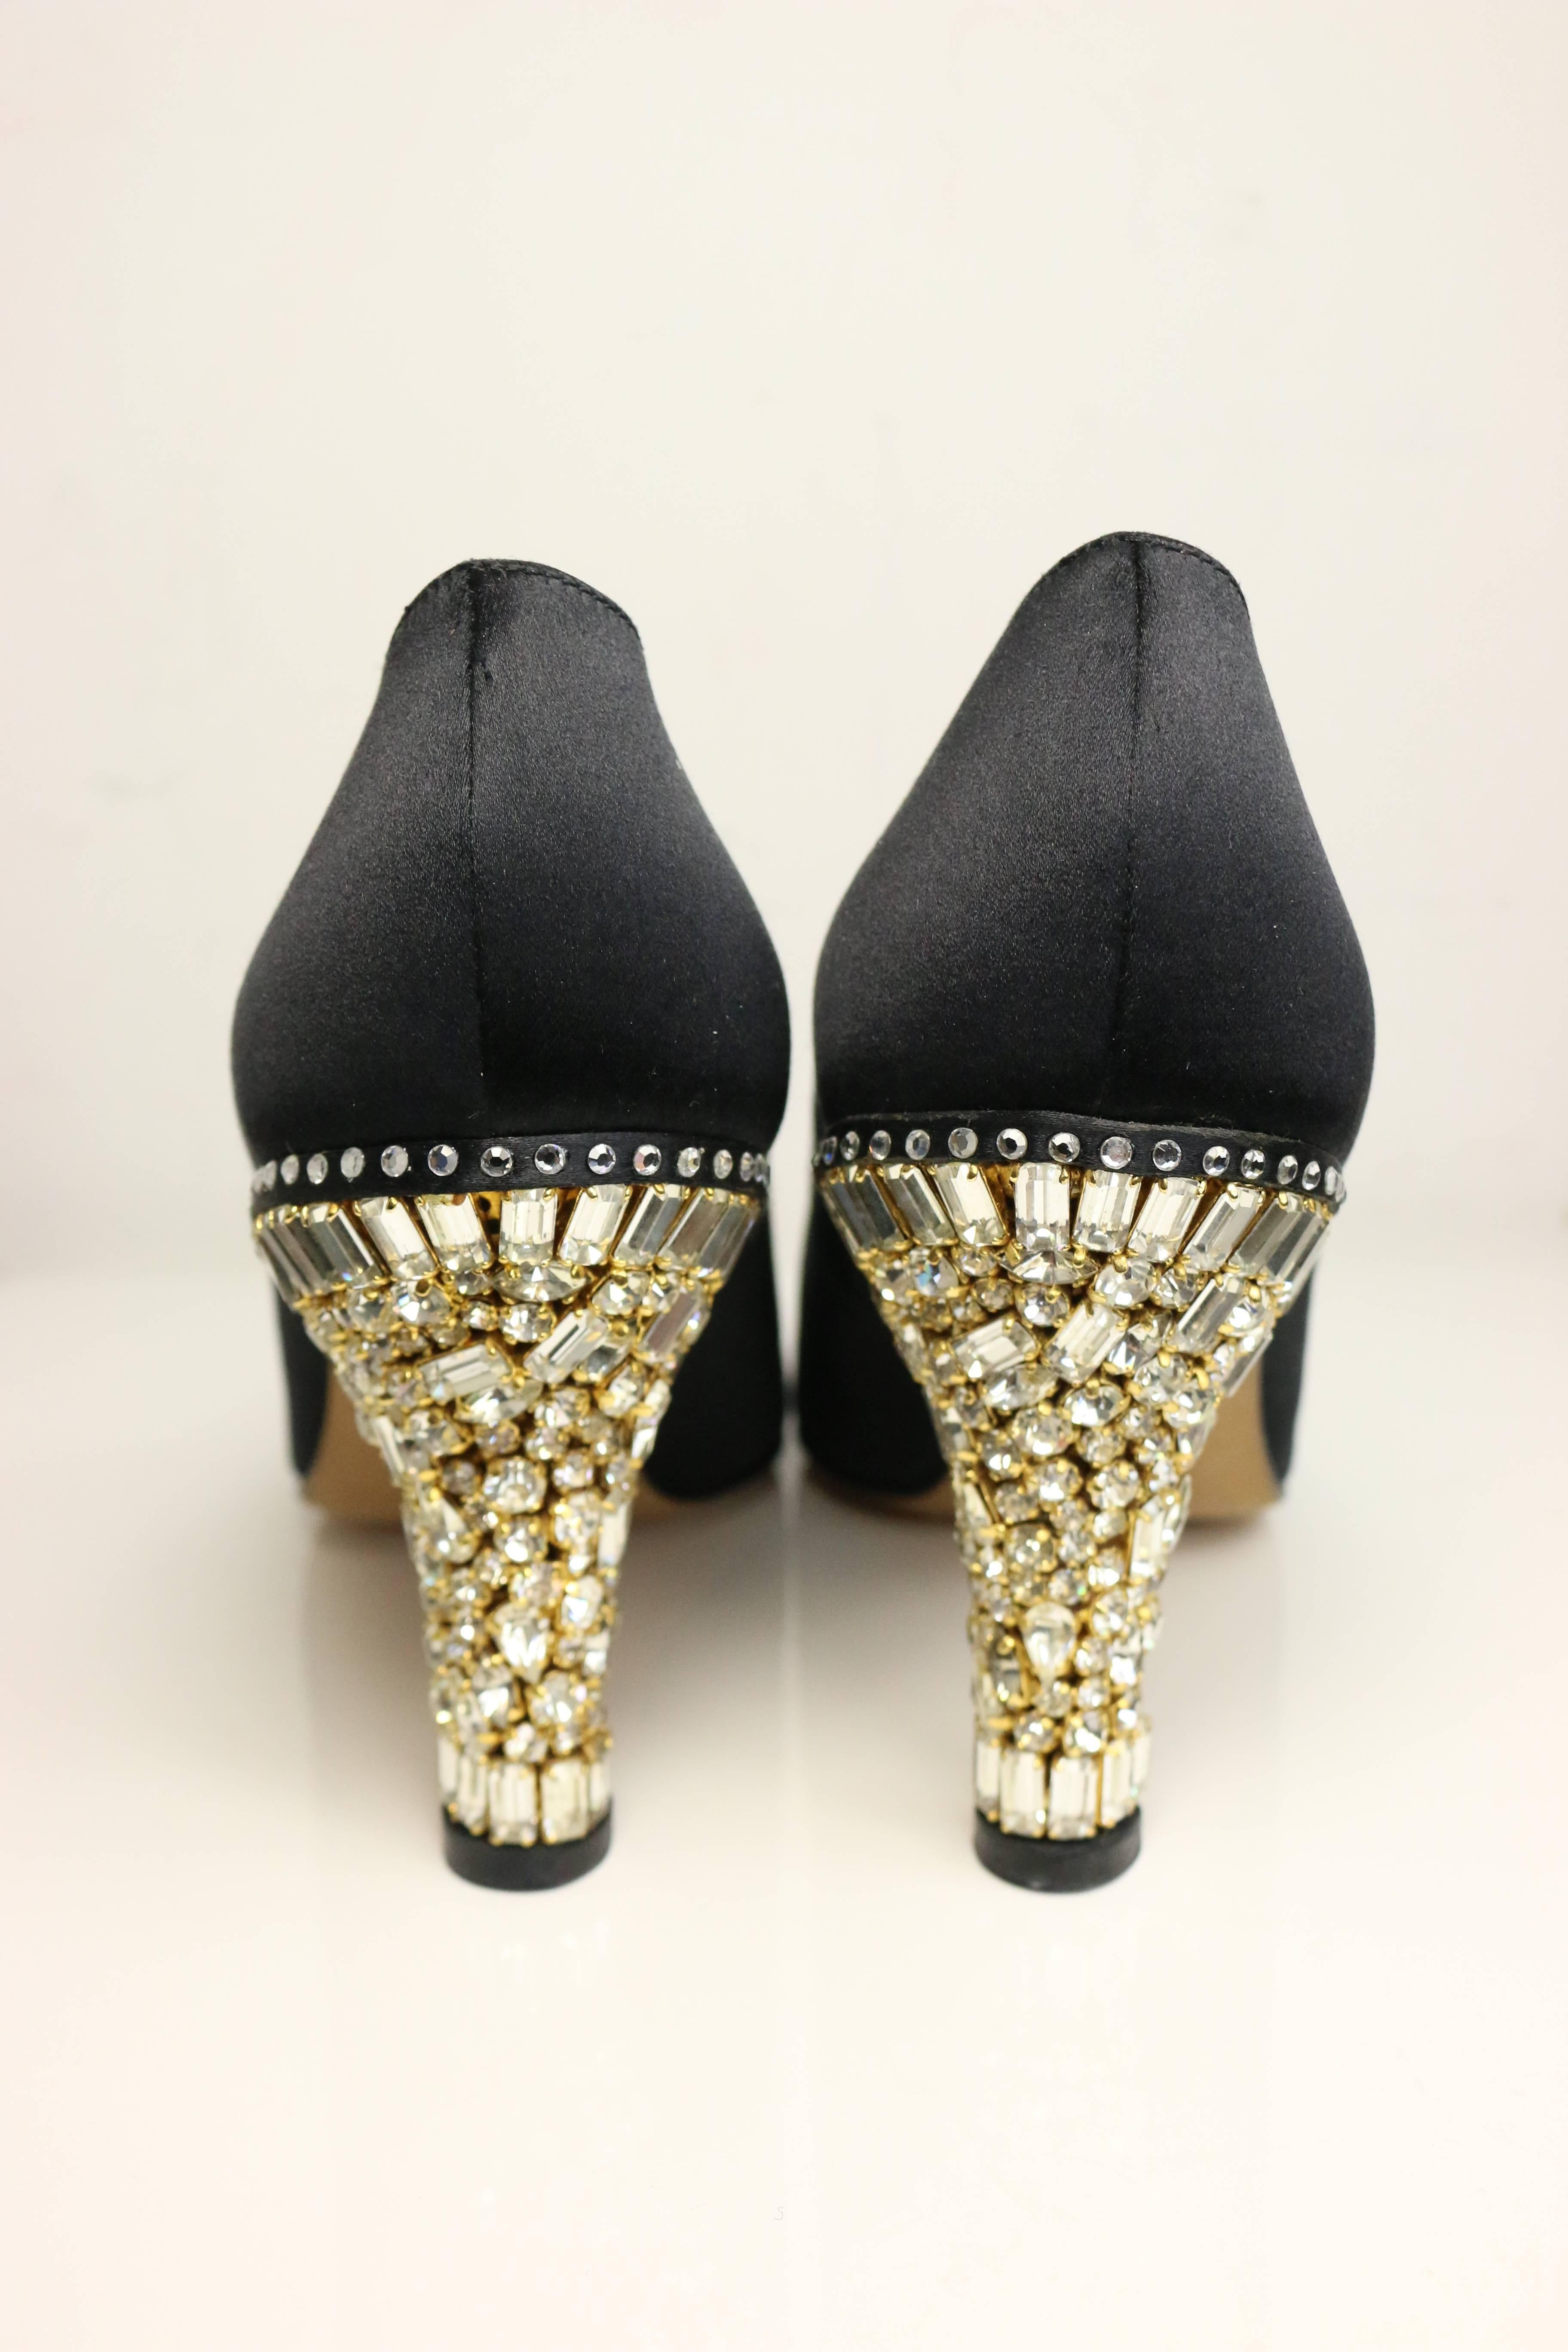 - Vintage 80s Escada black satin pumps with crystal rhinestones heels

- Made in italy. 

- Size 37.5. 

